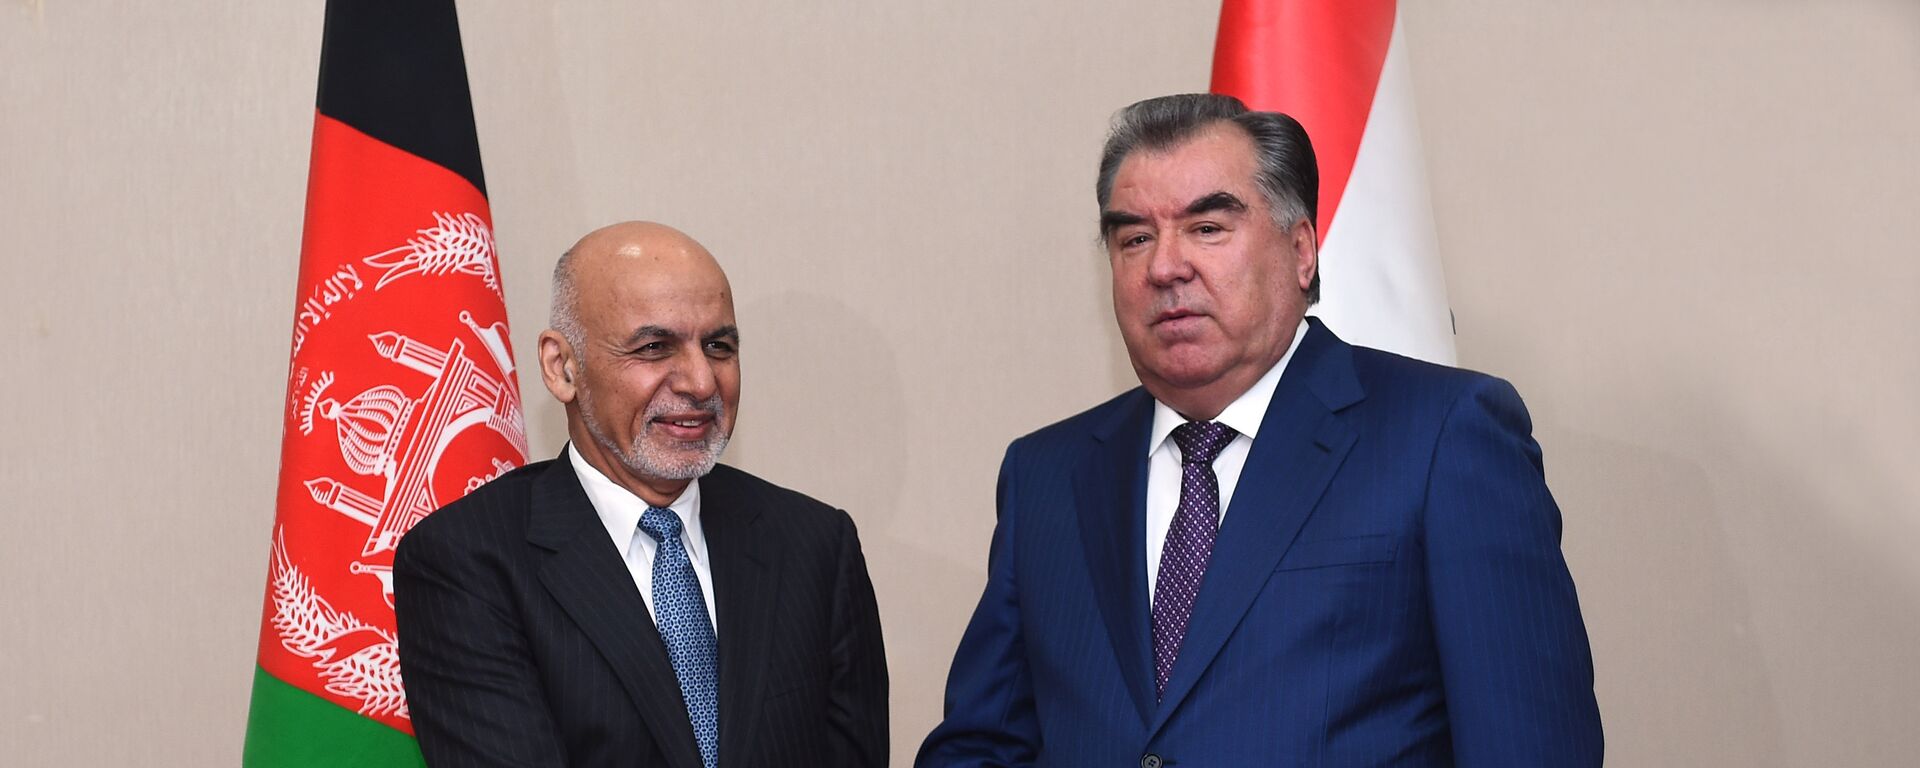 Эмомали Рахмон и Ашраф Гани - президент Афганистана - Sputnik Таджикистан, 1920, 21.08.2020